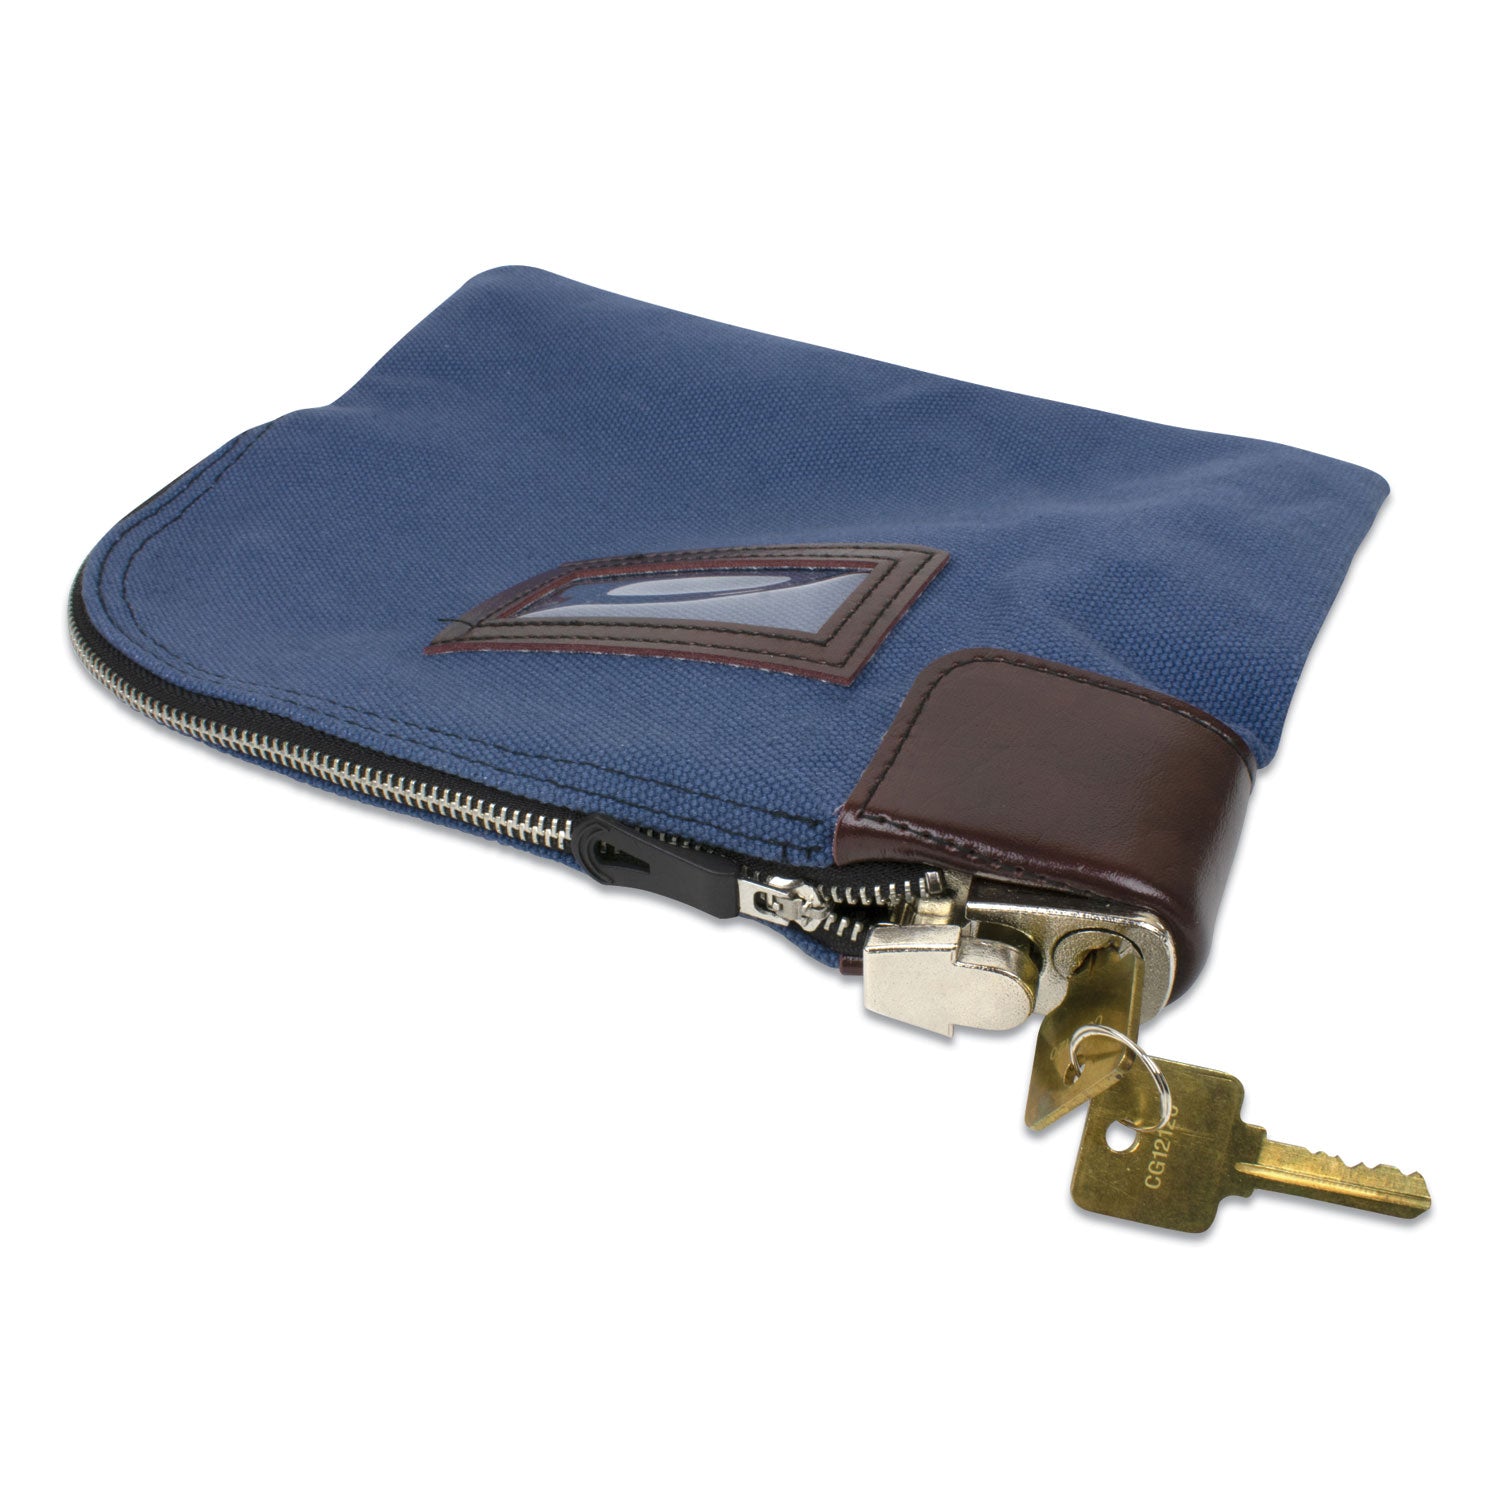 fabric-deposit-bag-locking-85-x-11-x-1-nylon-blue_cnk530980 - 1